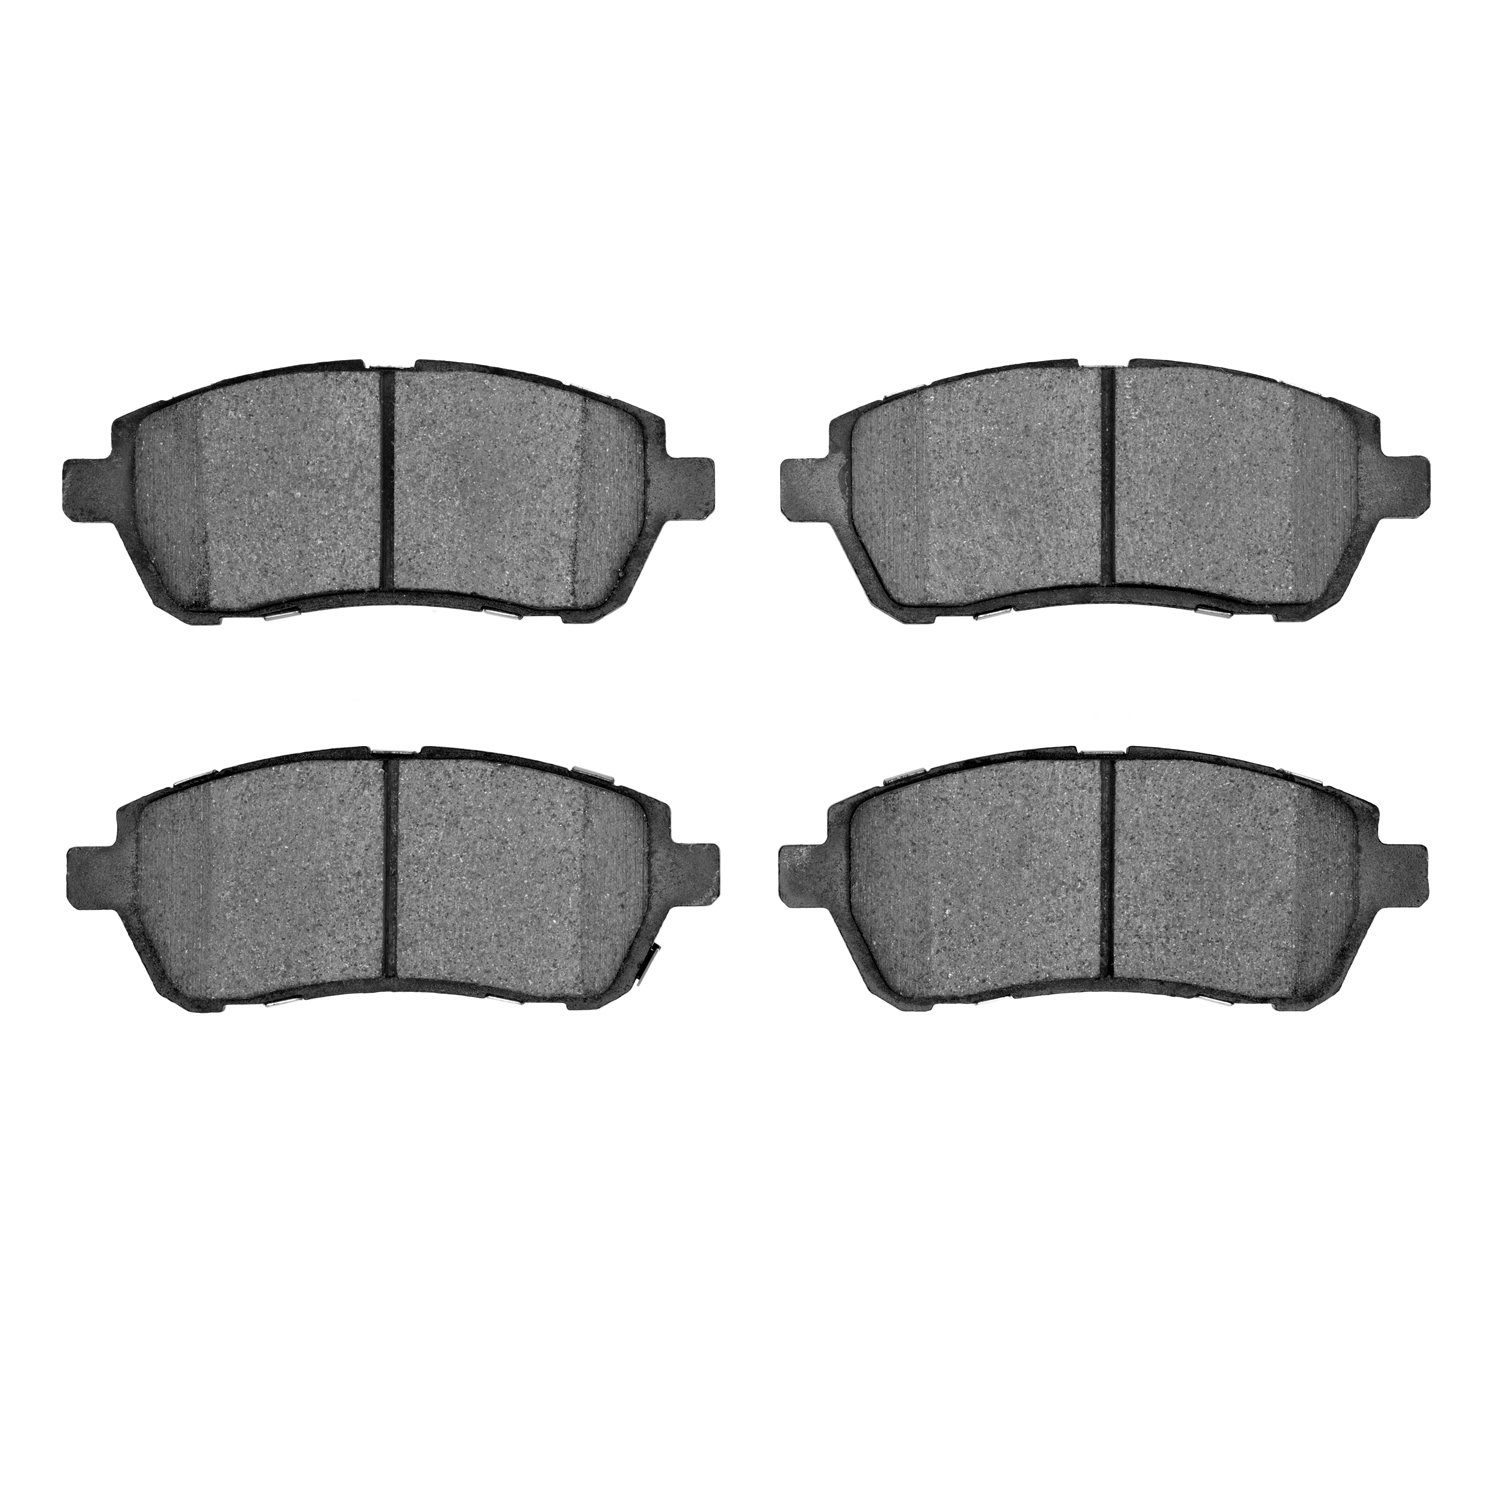 1310-1454-10 3000-Series Ceramic Brake Pads, 2011-2017 Multiple Makes/Models, Position: Front